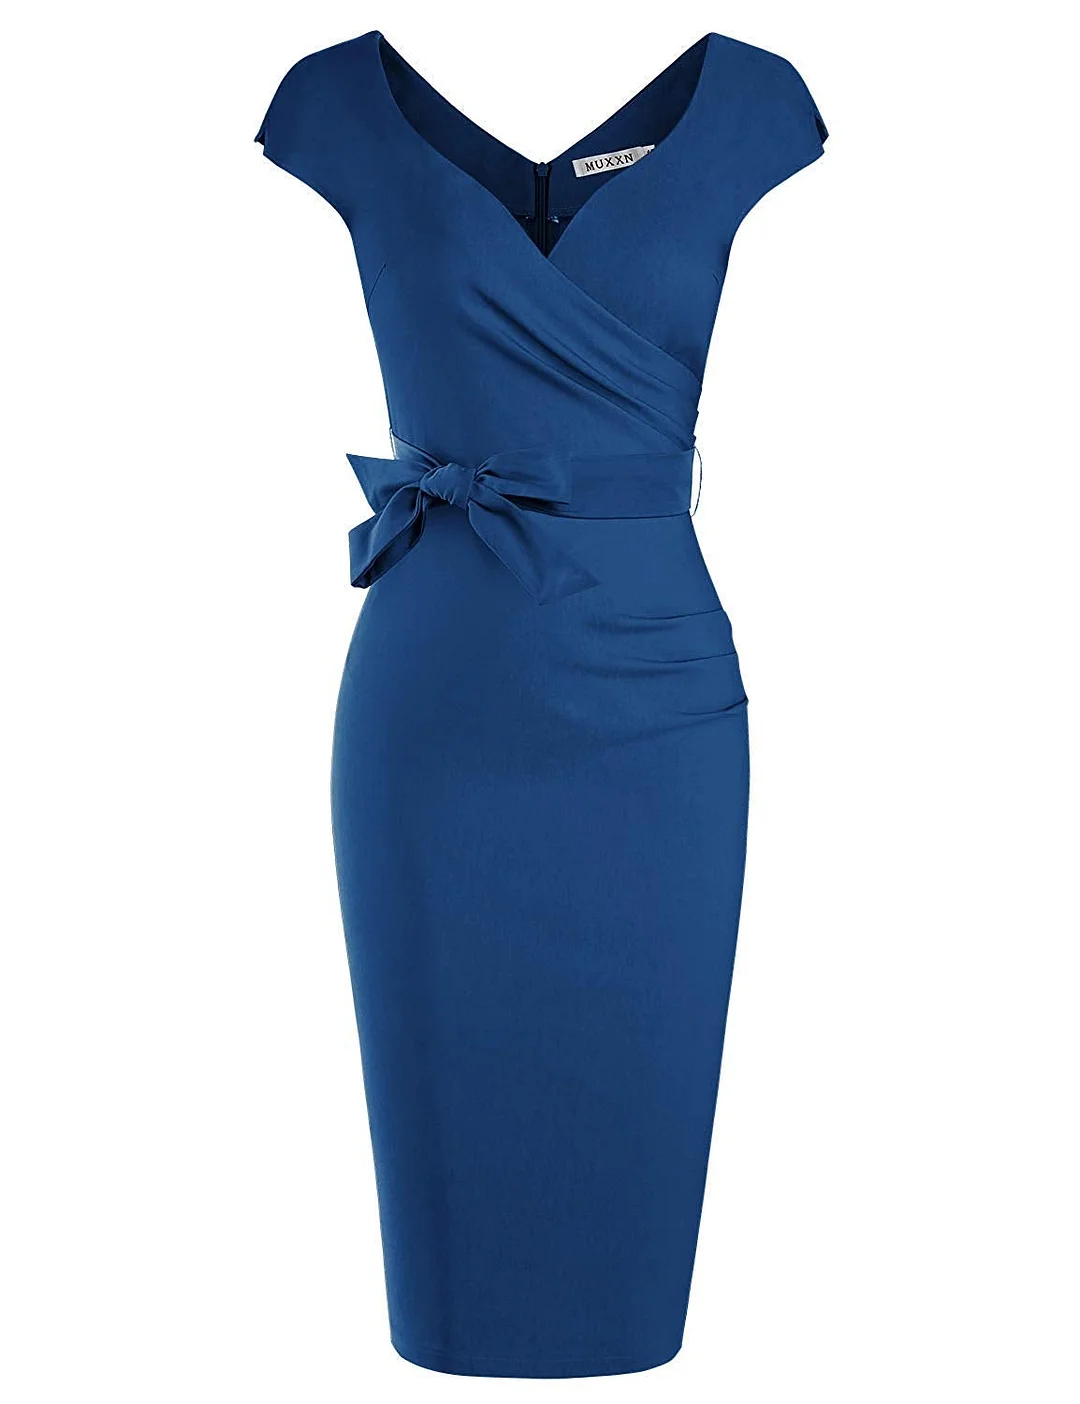 Women's Vintage 1950s Style Wrap V Neck Tie Waist Formal Cocktail Dress